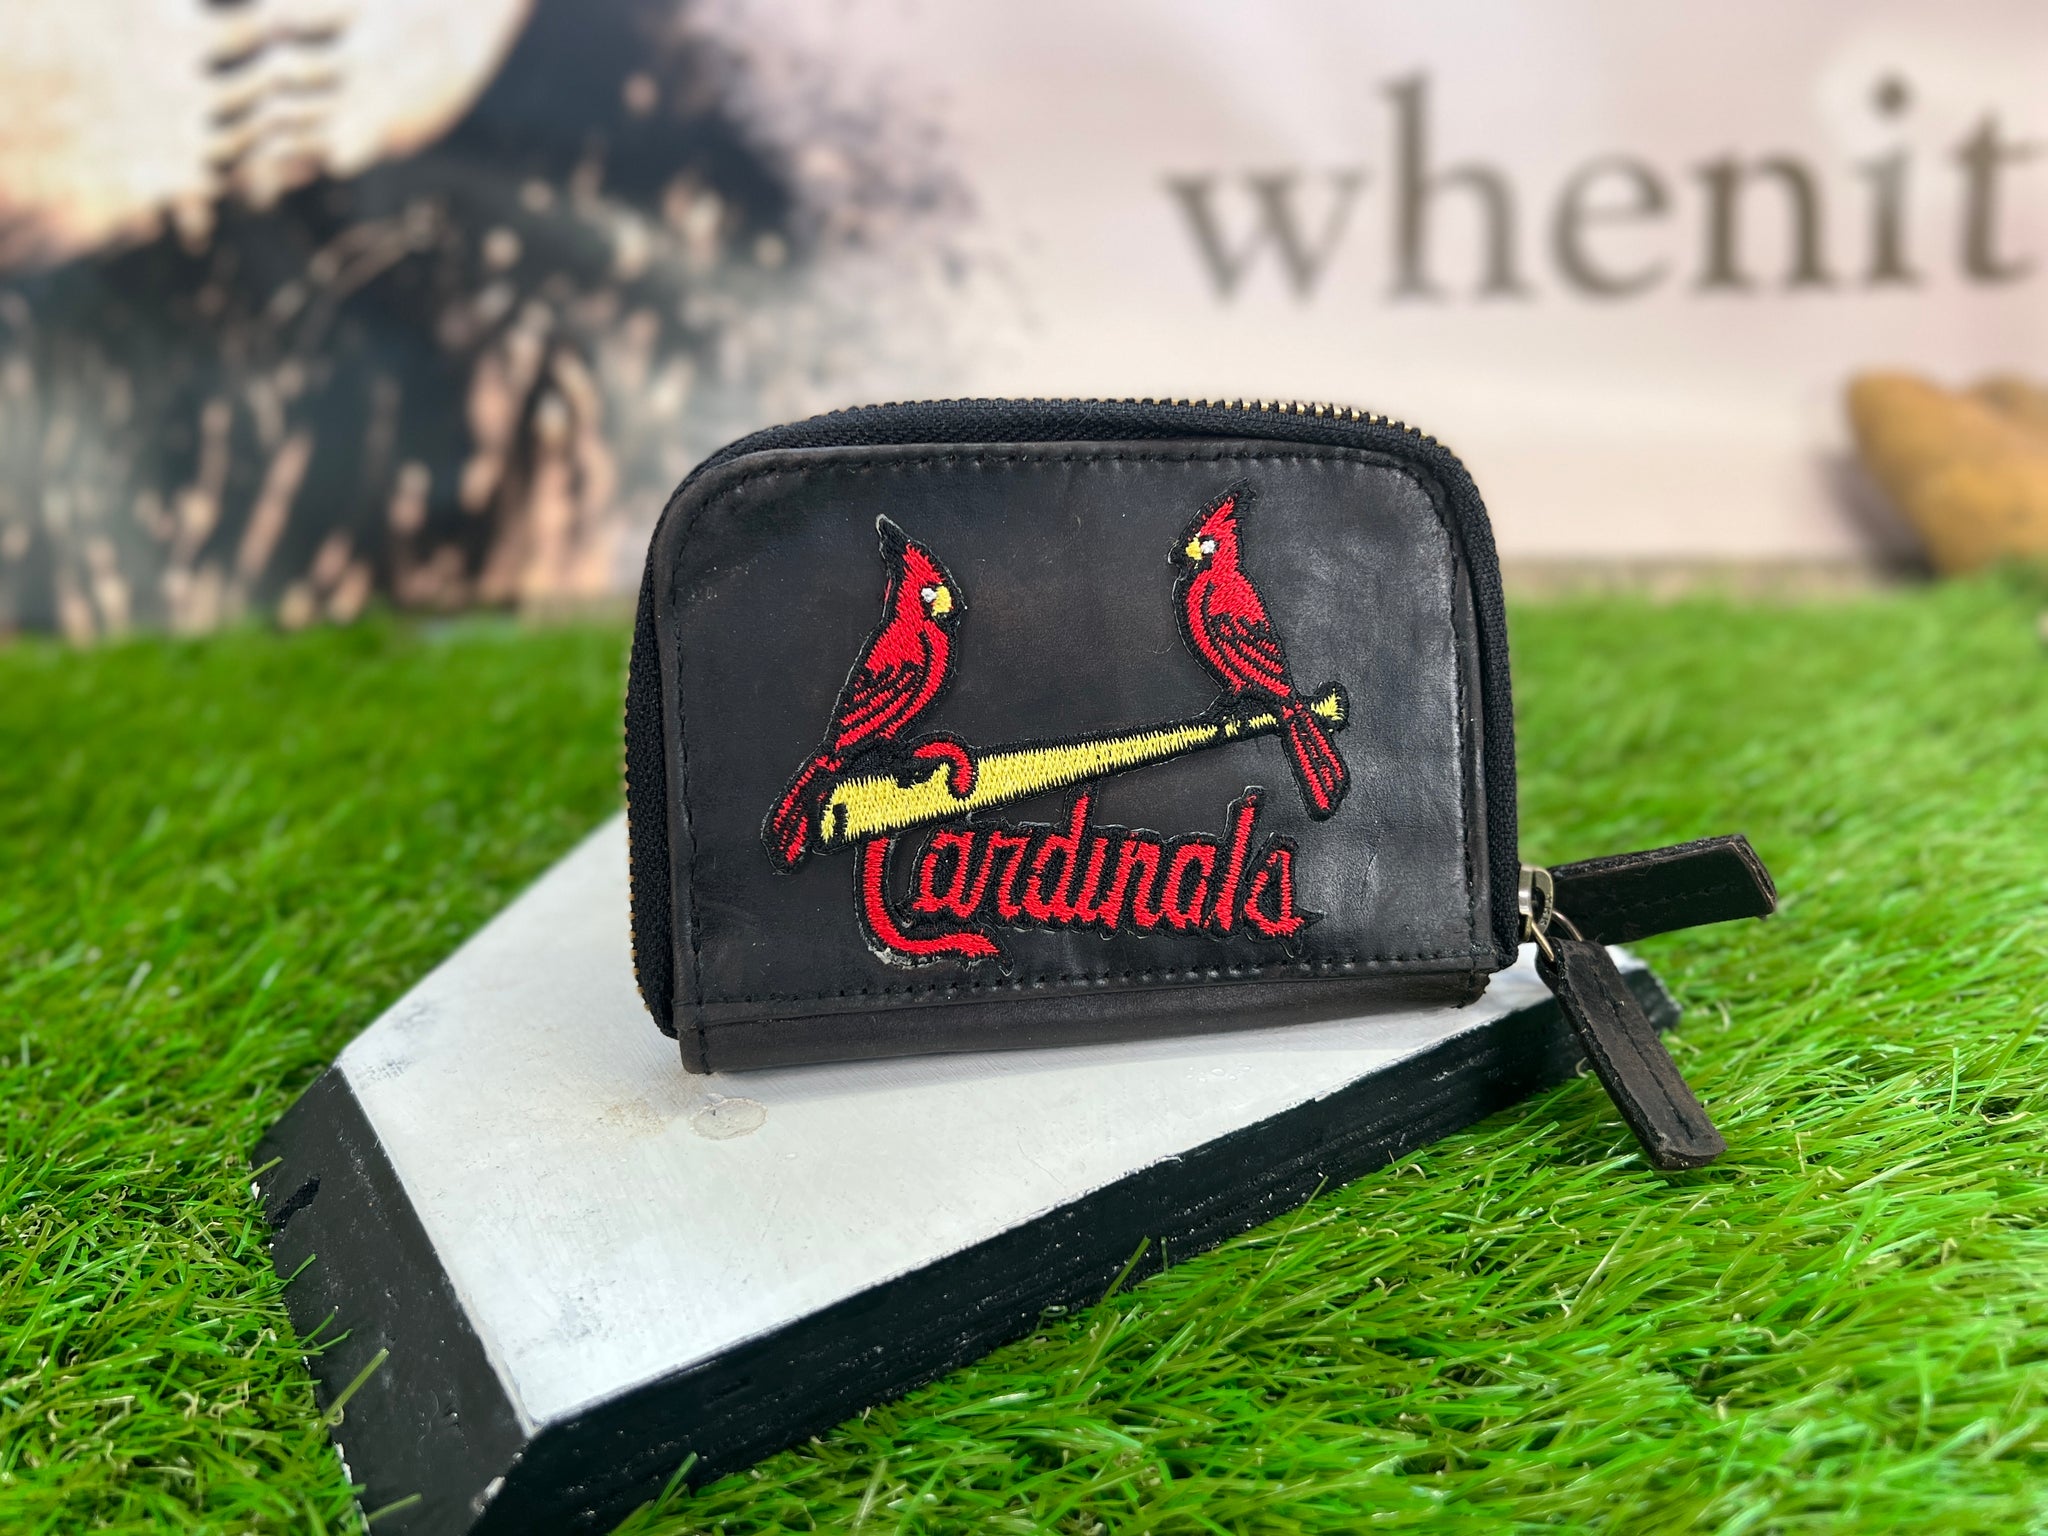 St. Louis Cardinals Business Card Wallet - Black